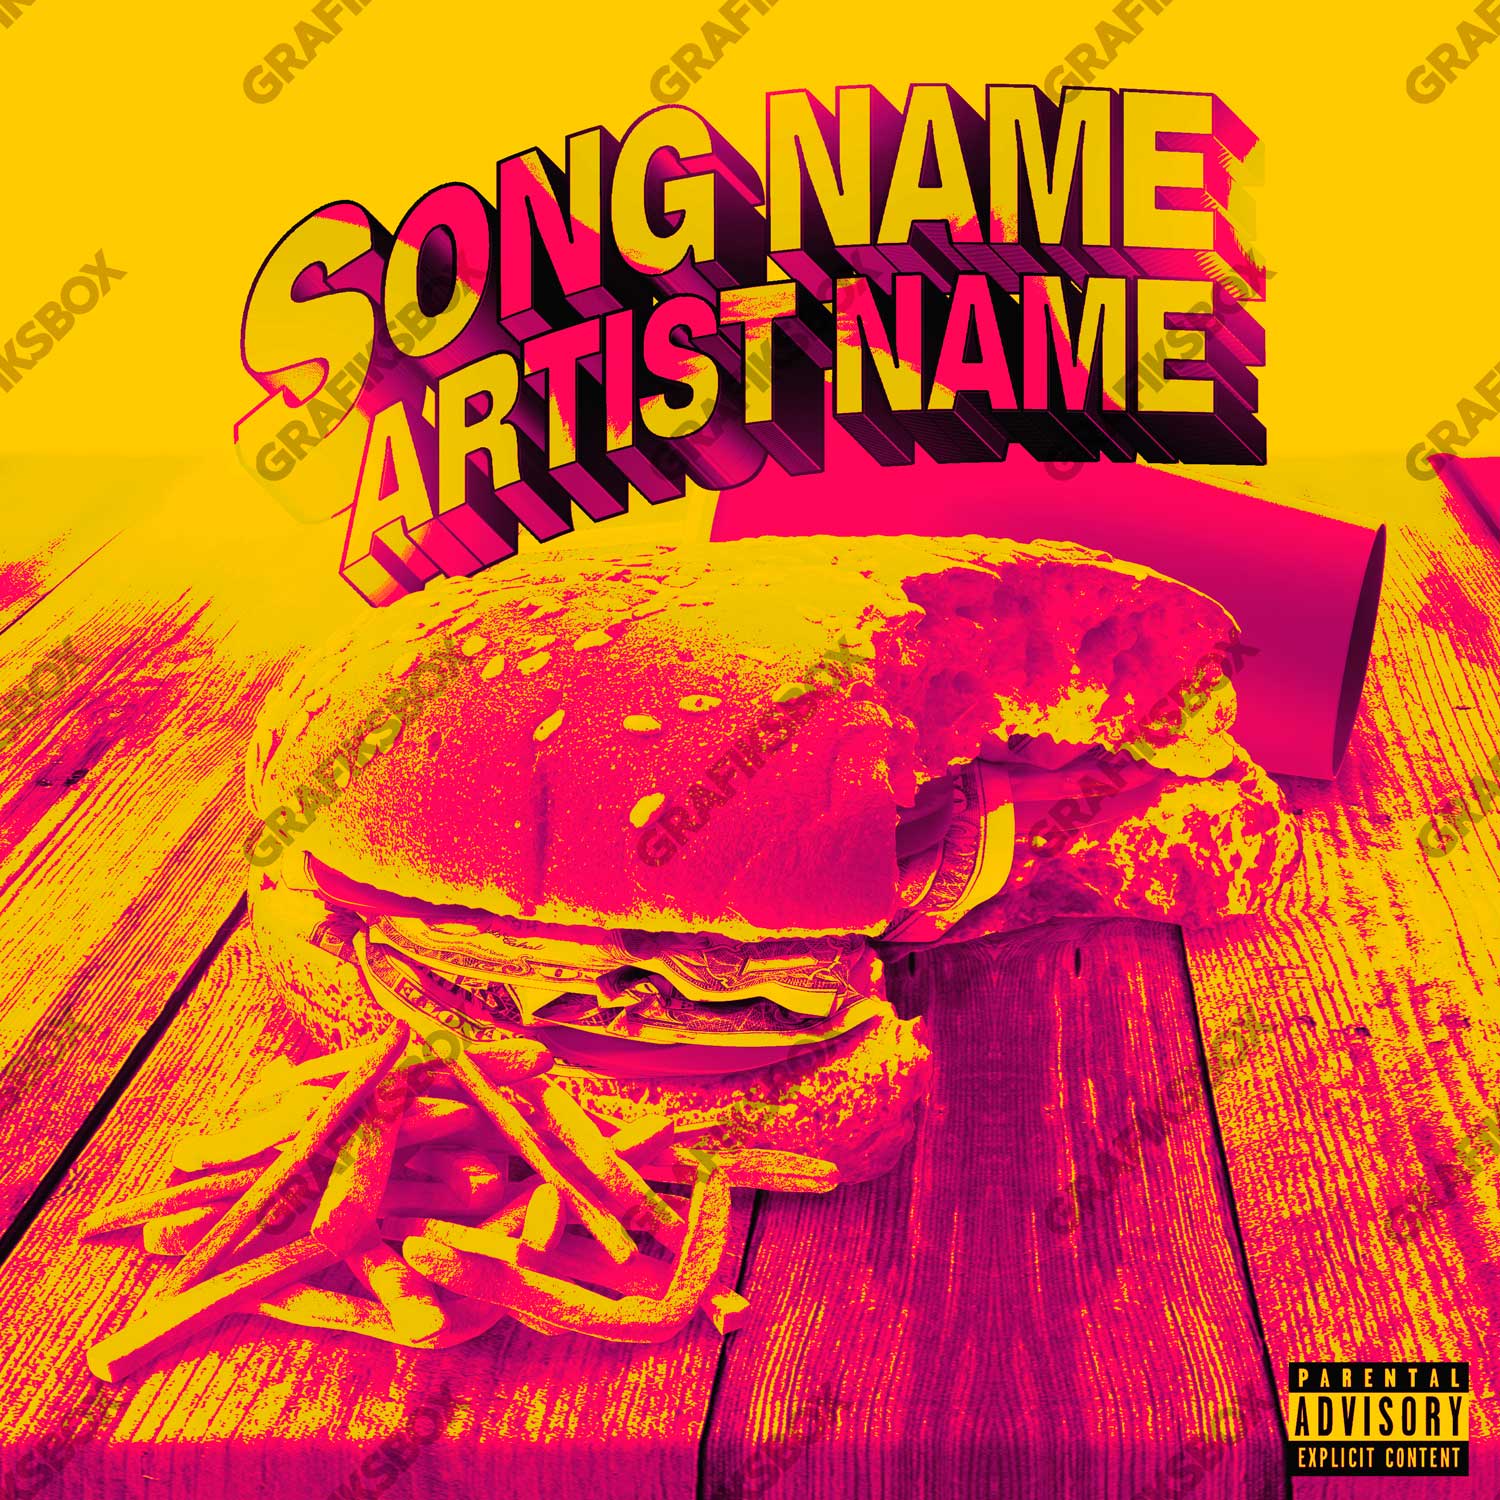 Cash Burger premade cover art